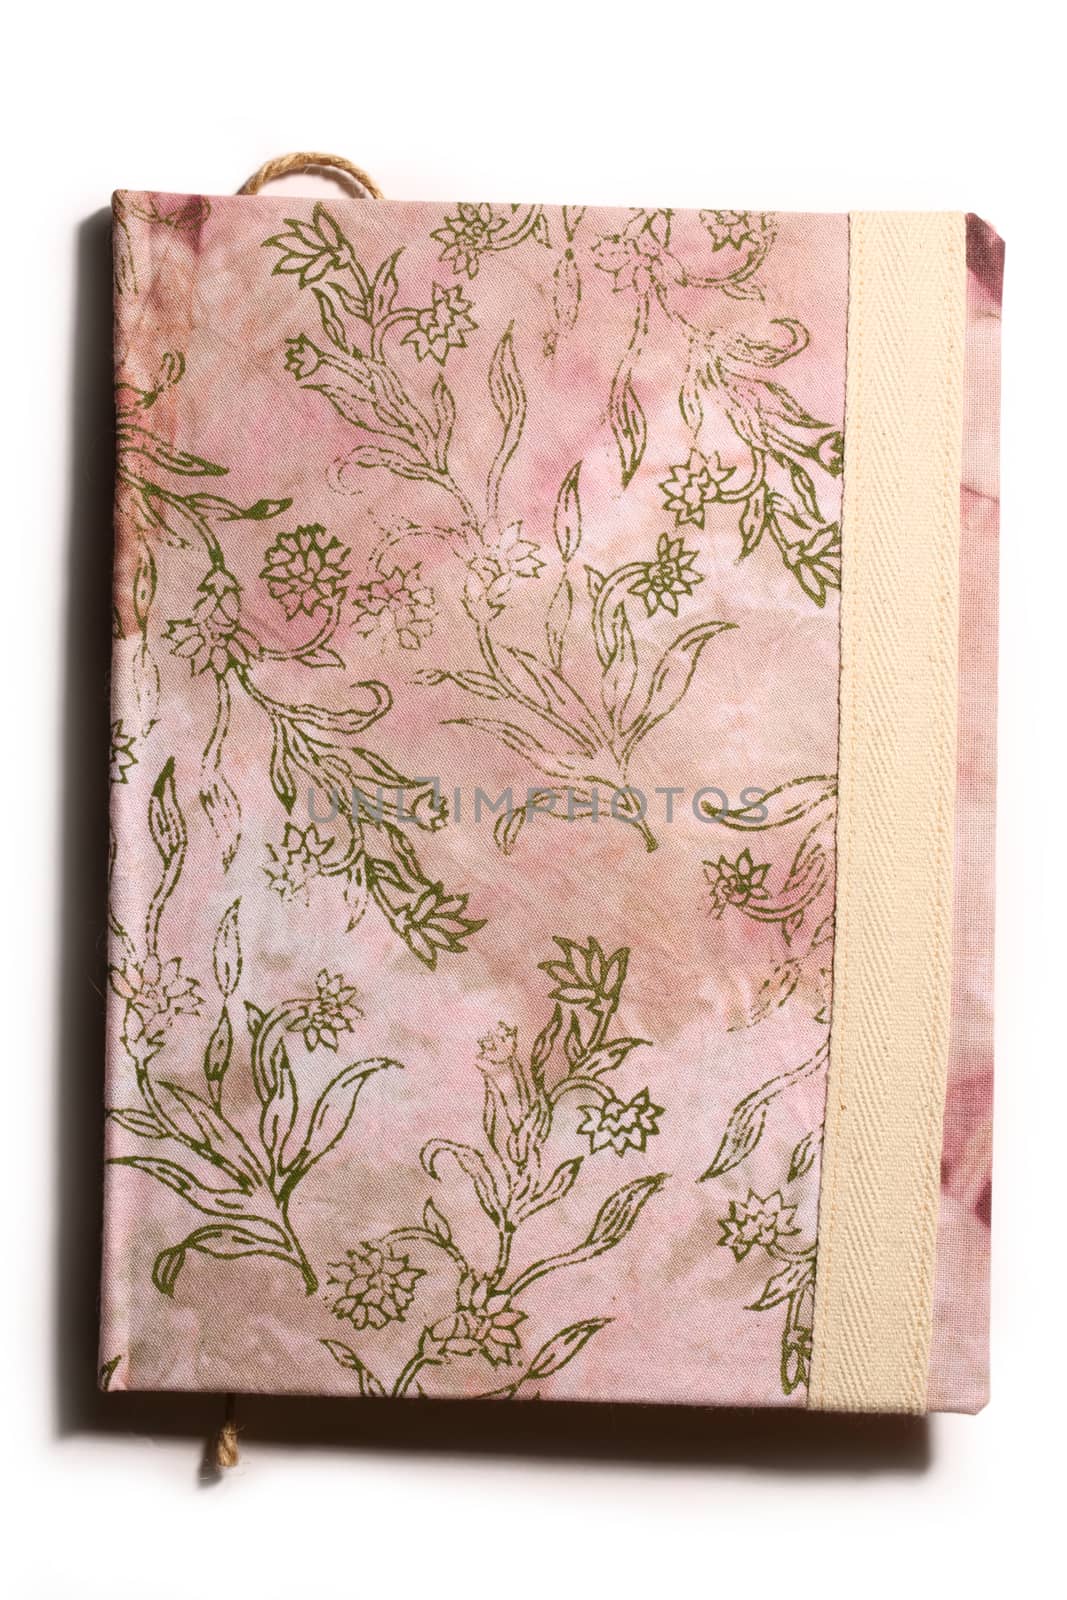 Silk batik book with abstract flowers by Garsya